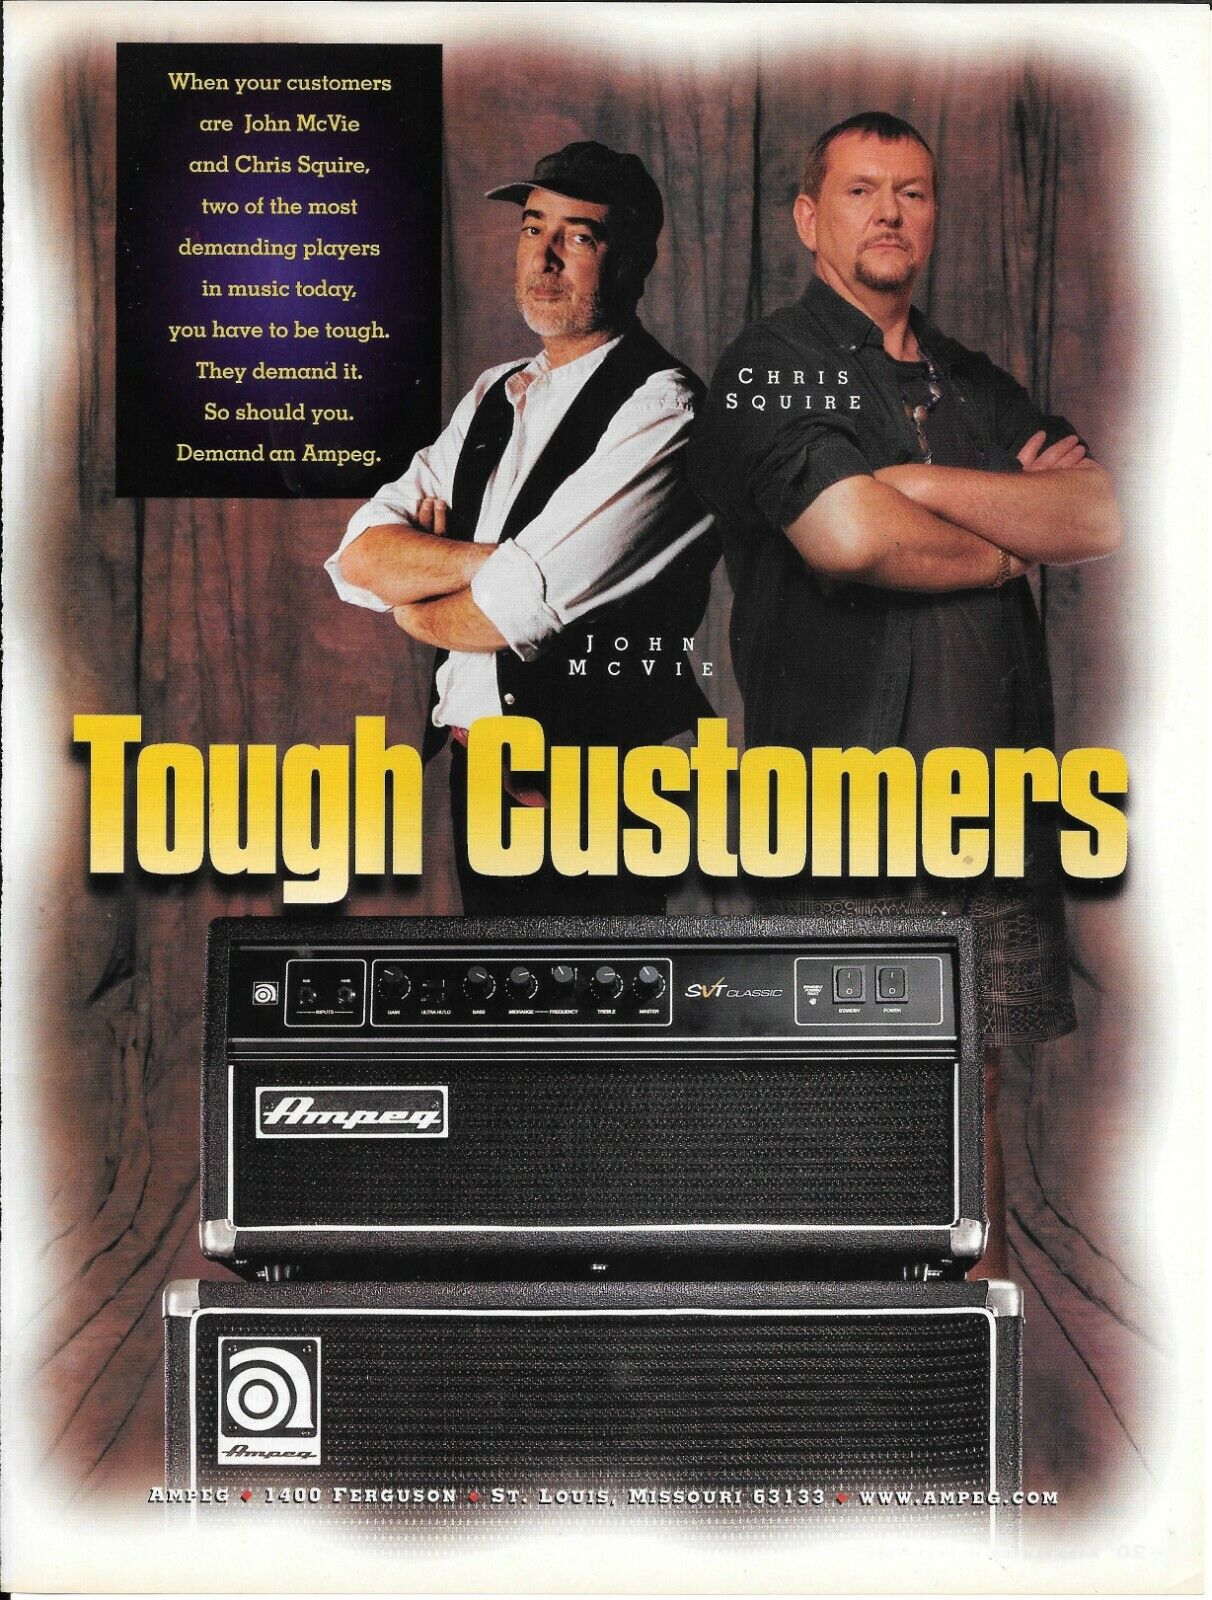 AMPEG AMPS - Chris Squire & John McVie  - 1998 Print Advertisement